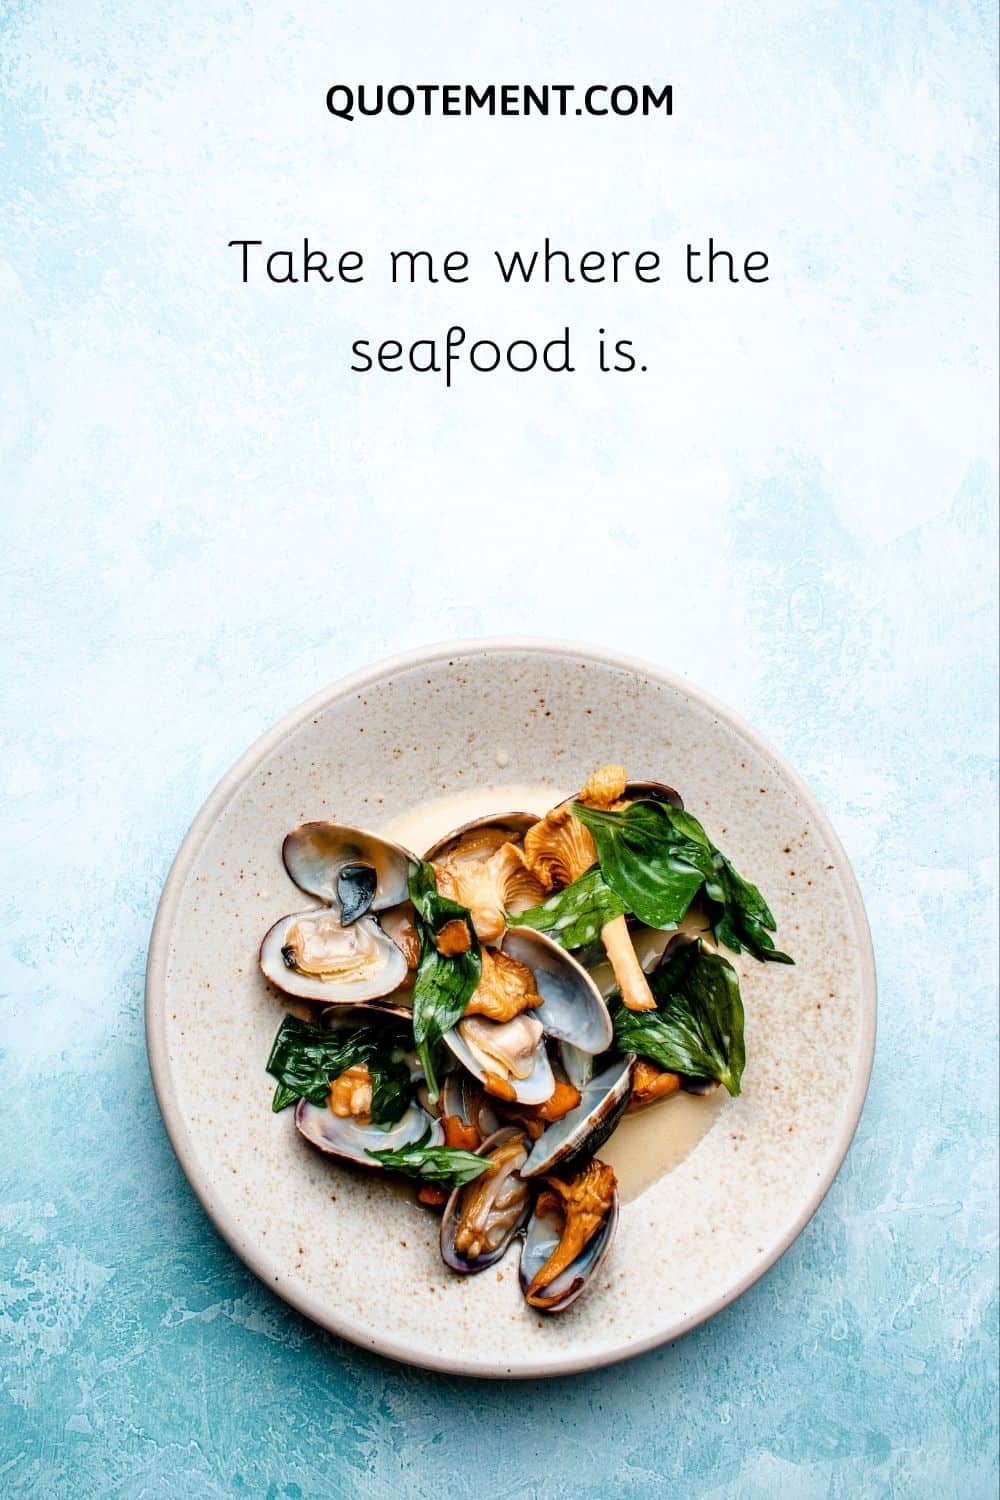 Take me where the seafood is.